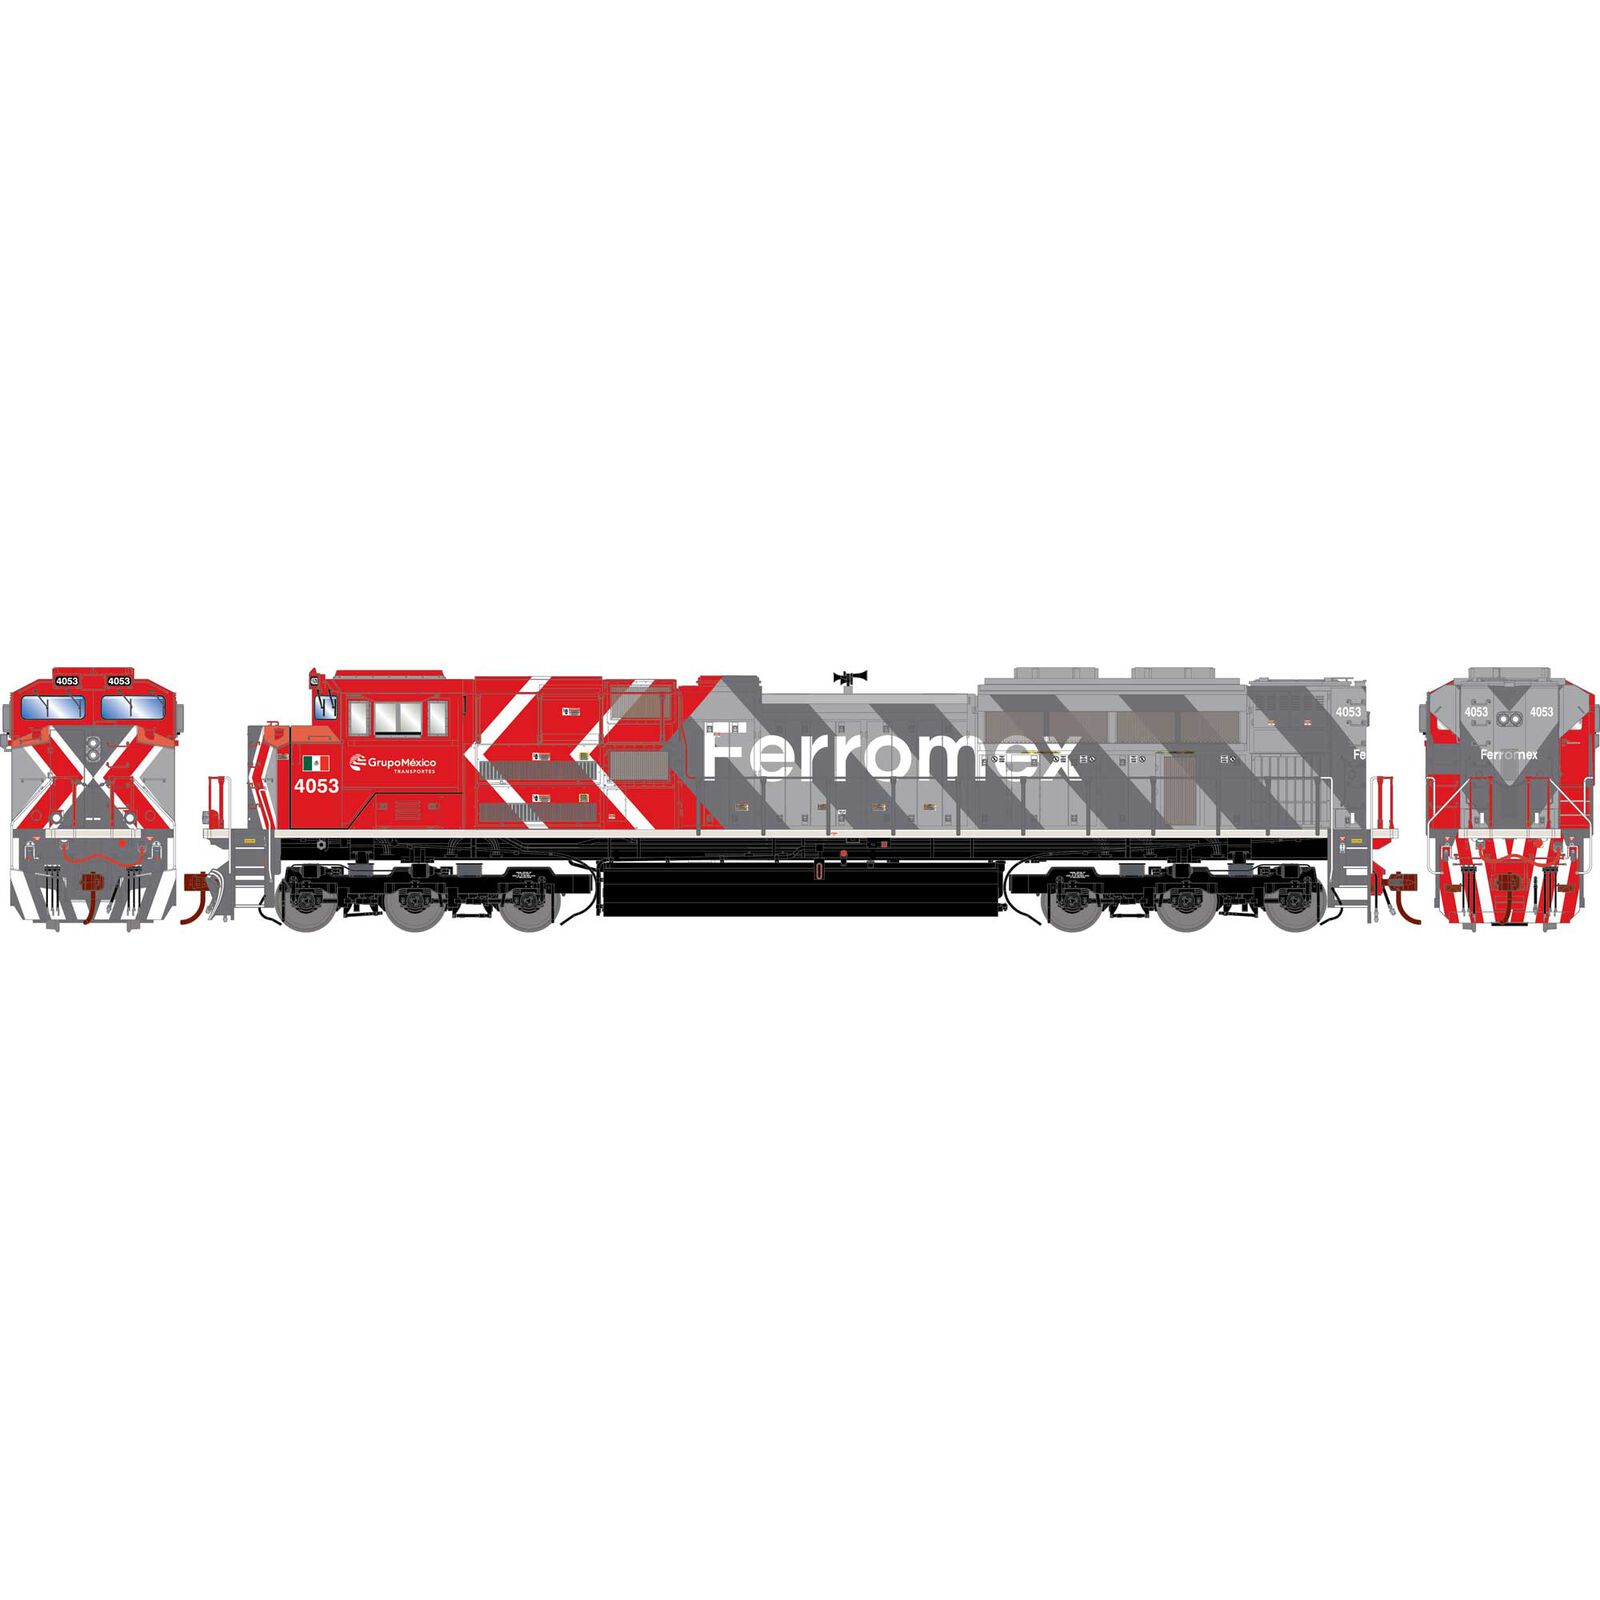 HO SD70ACe Locomotive with DCC & Sound, Ferromex #4053